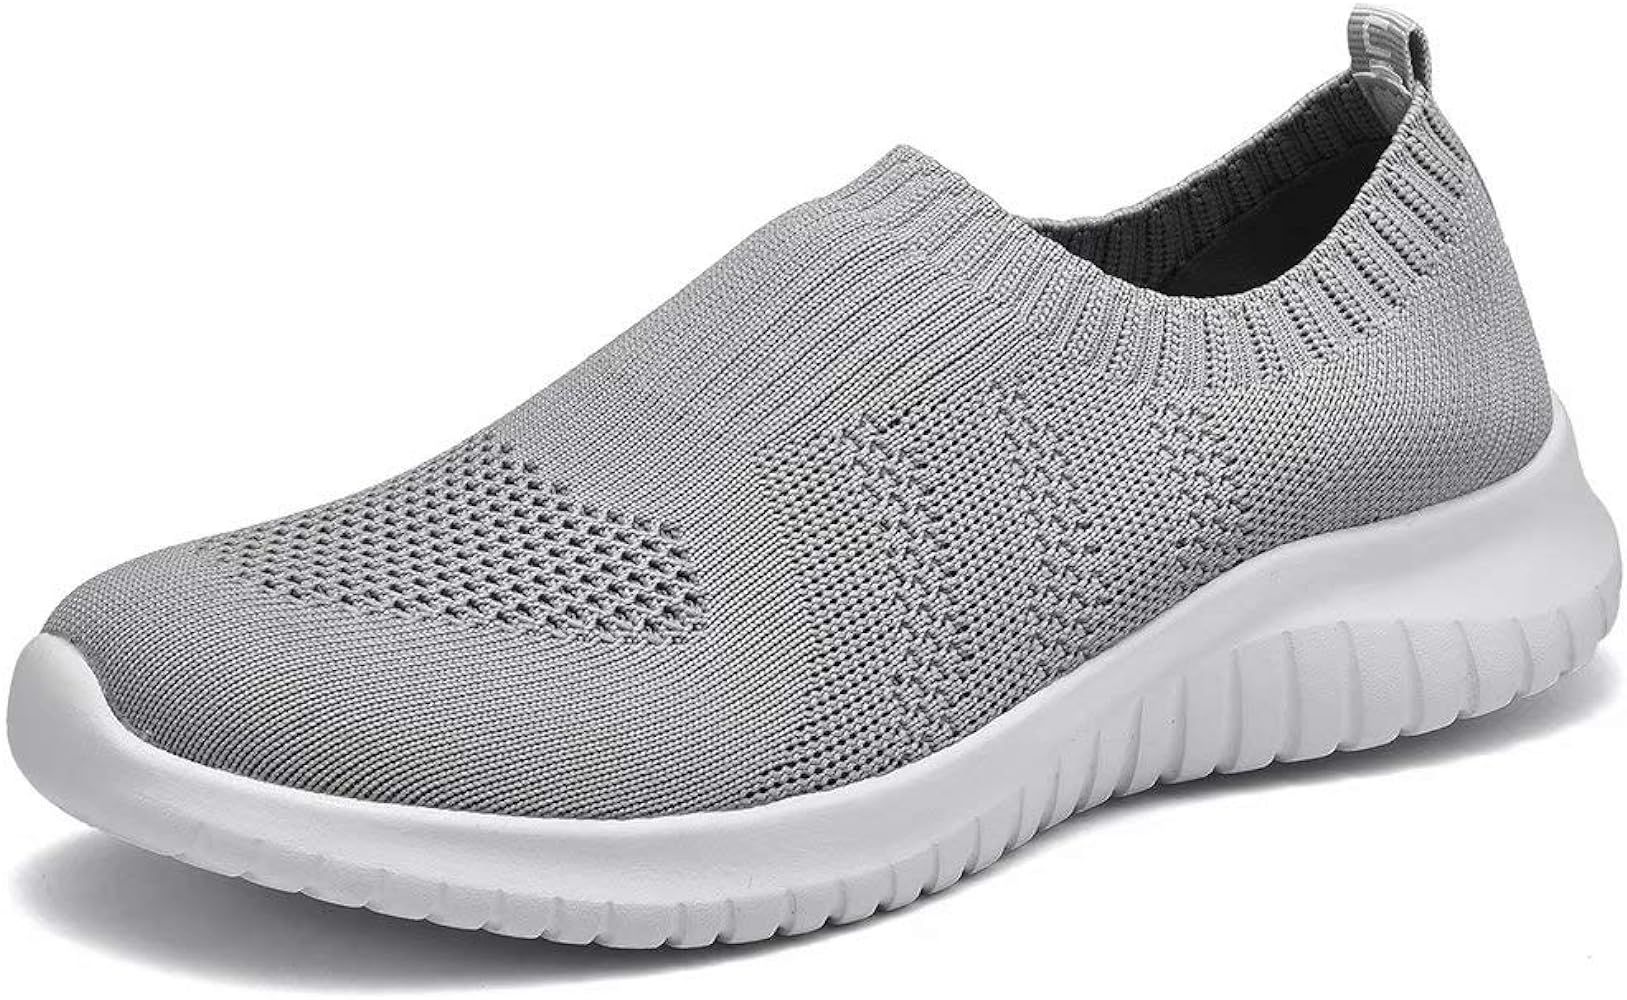 konhill Women's Walking Tennis Shoes - Lightweight Athletic Casual Gym Slip on Sneakers | Amazon (US)